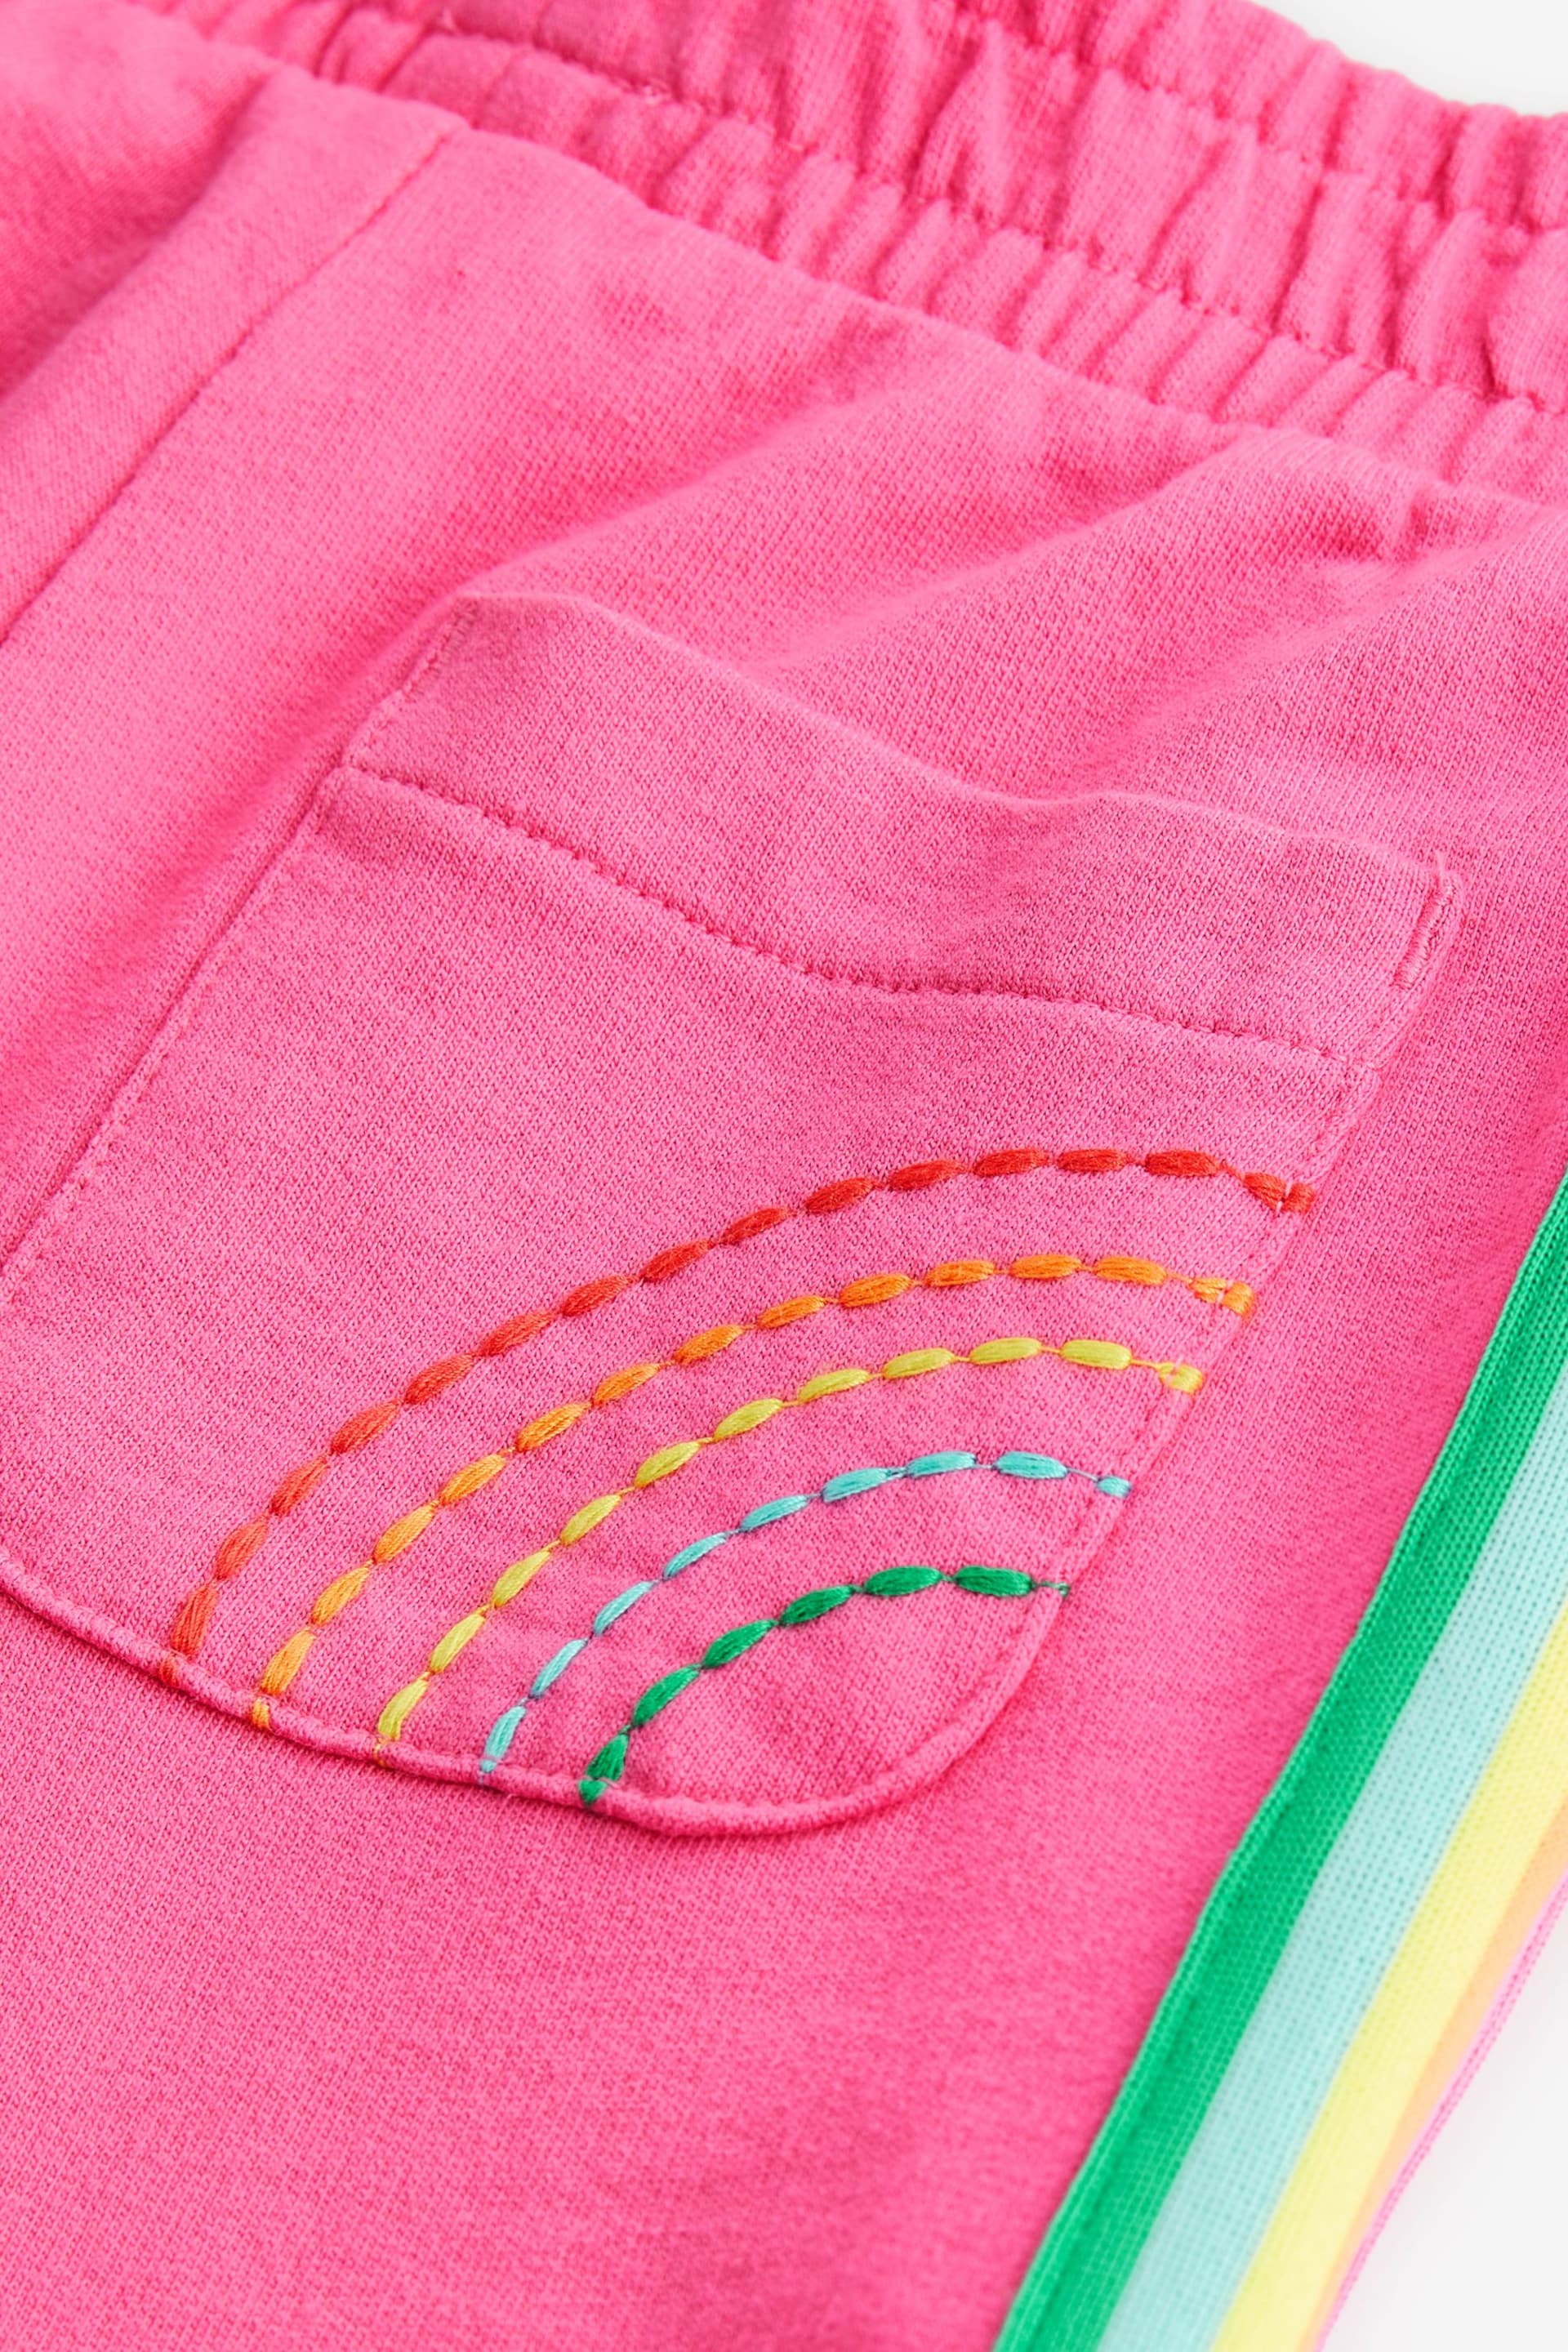 Little Bird by Jools Oliver Pink Rainbow Sweatshirt and Jogger Set - Image 10 of 12